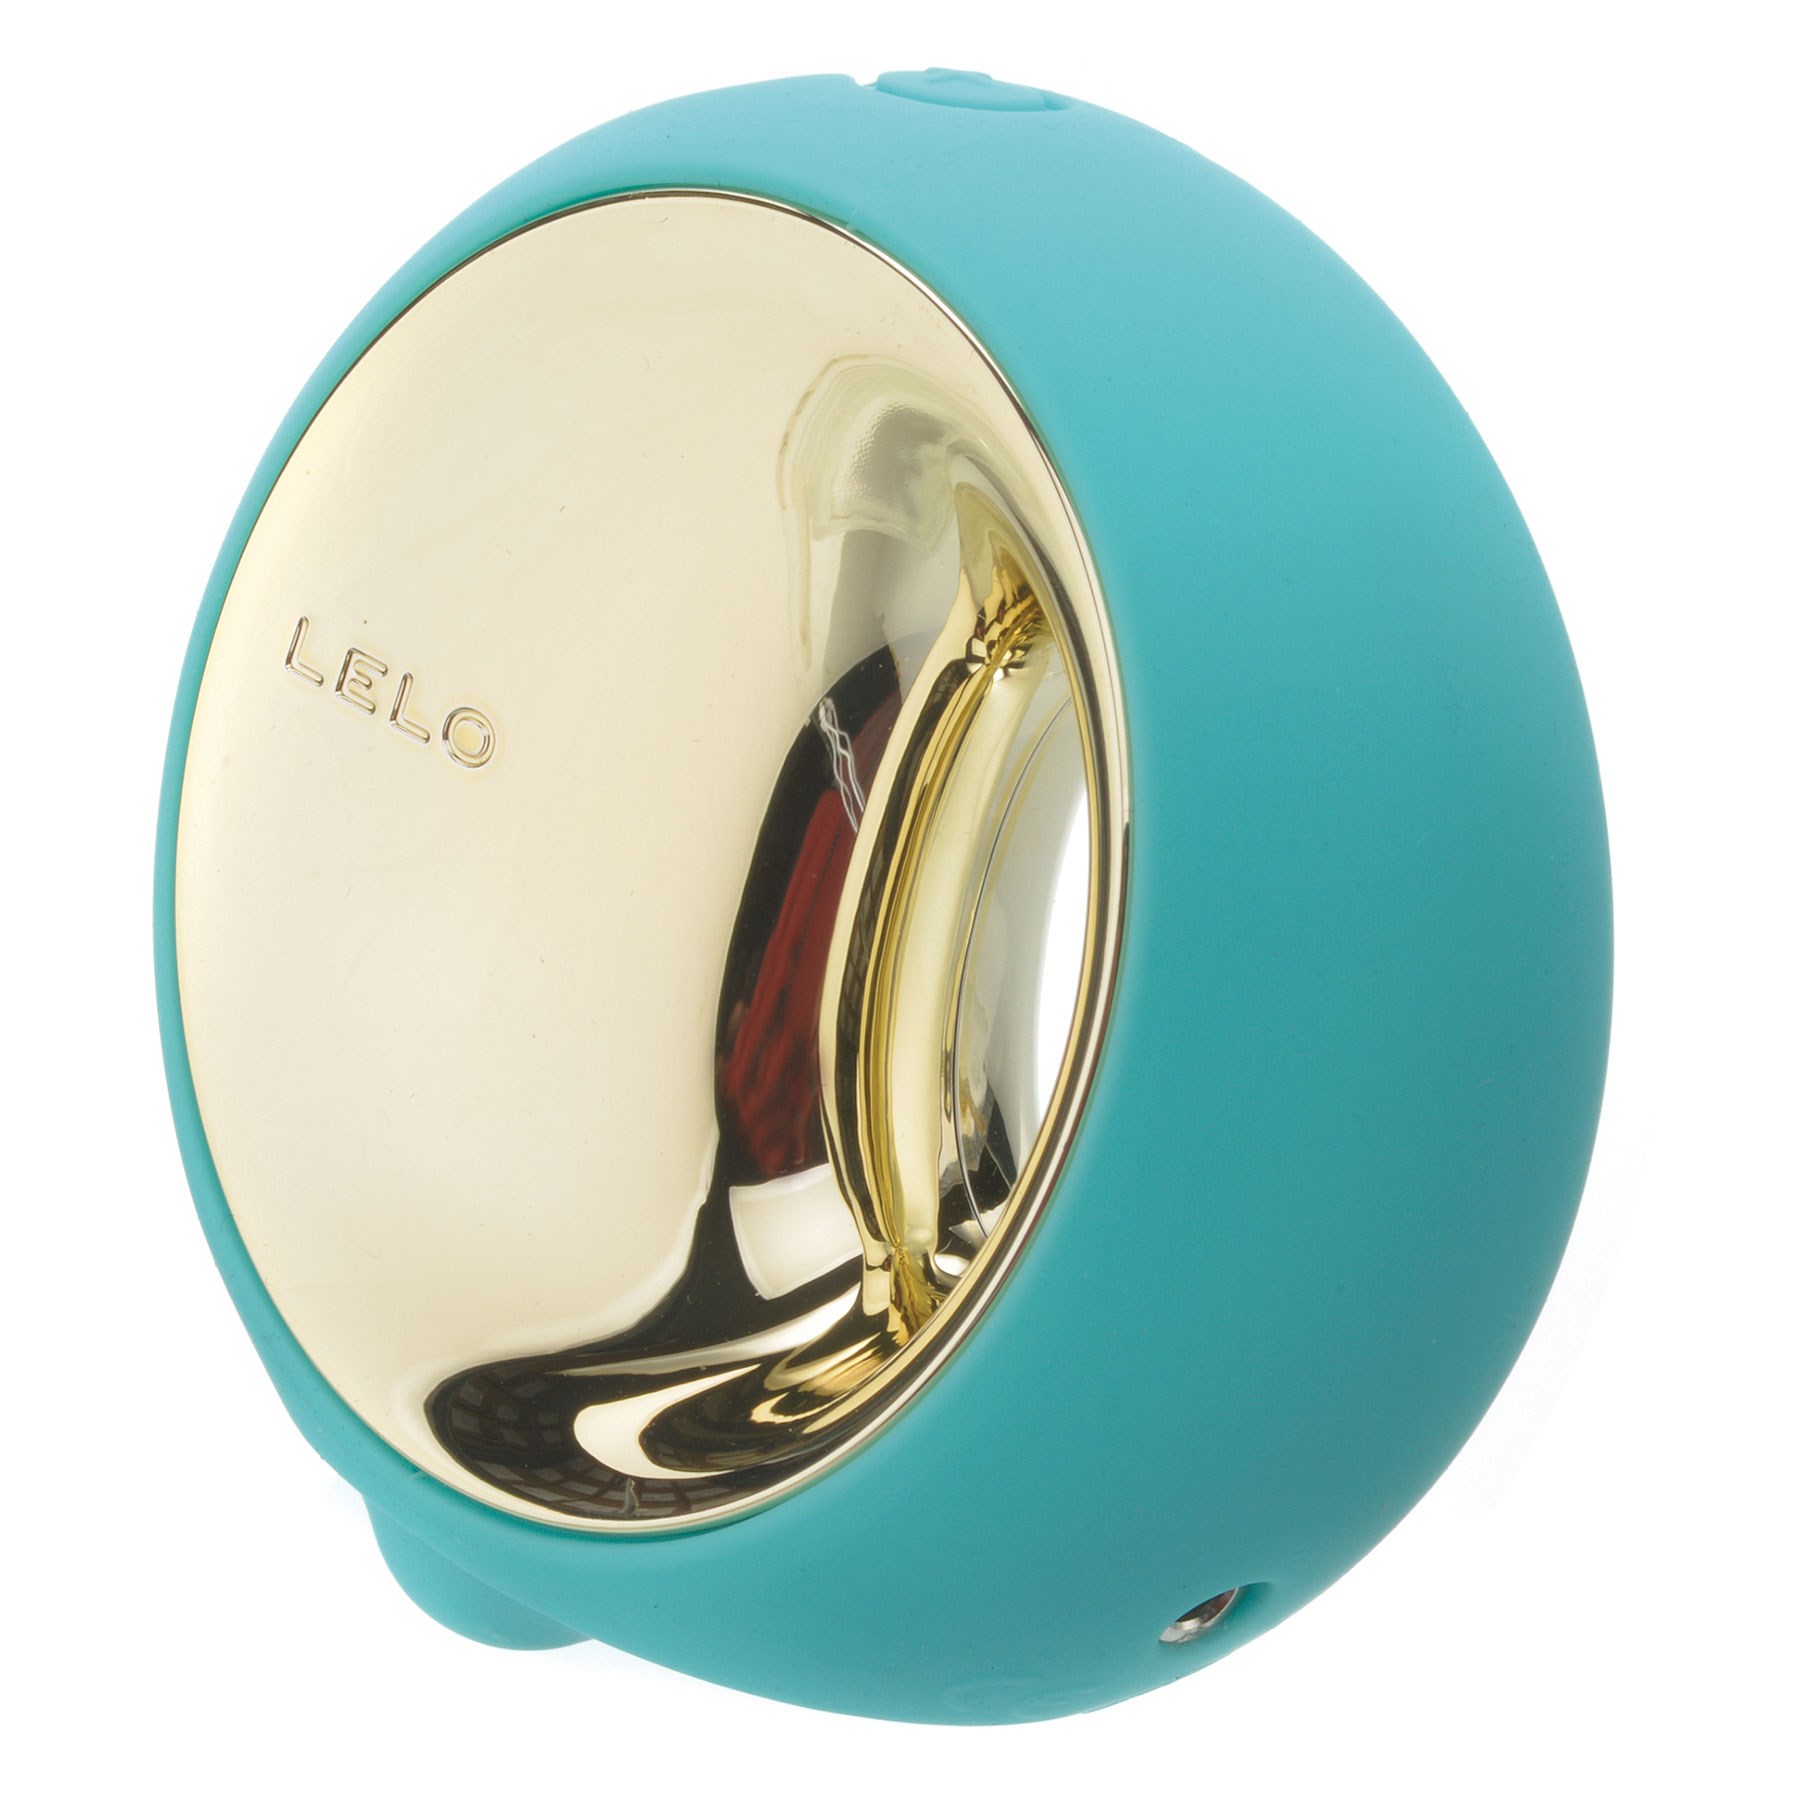 Lelo Ora 3 Oral Pleasure Stimulator showing gold